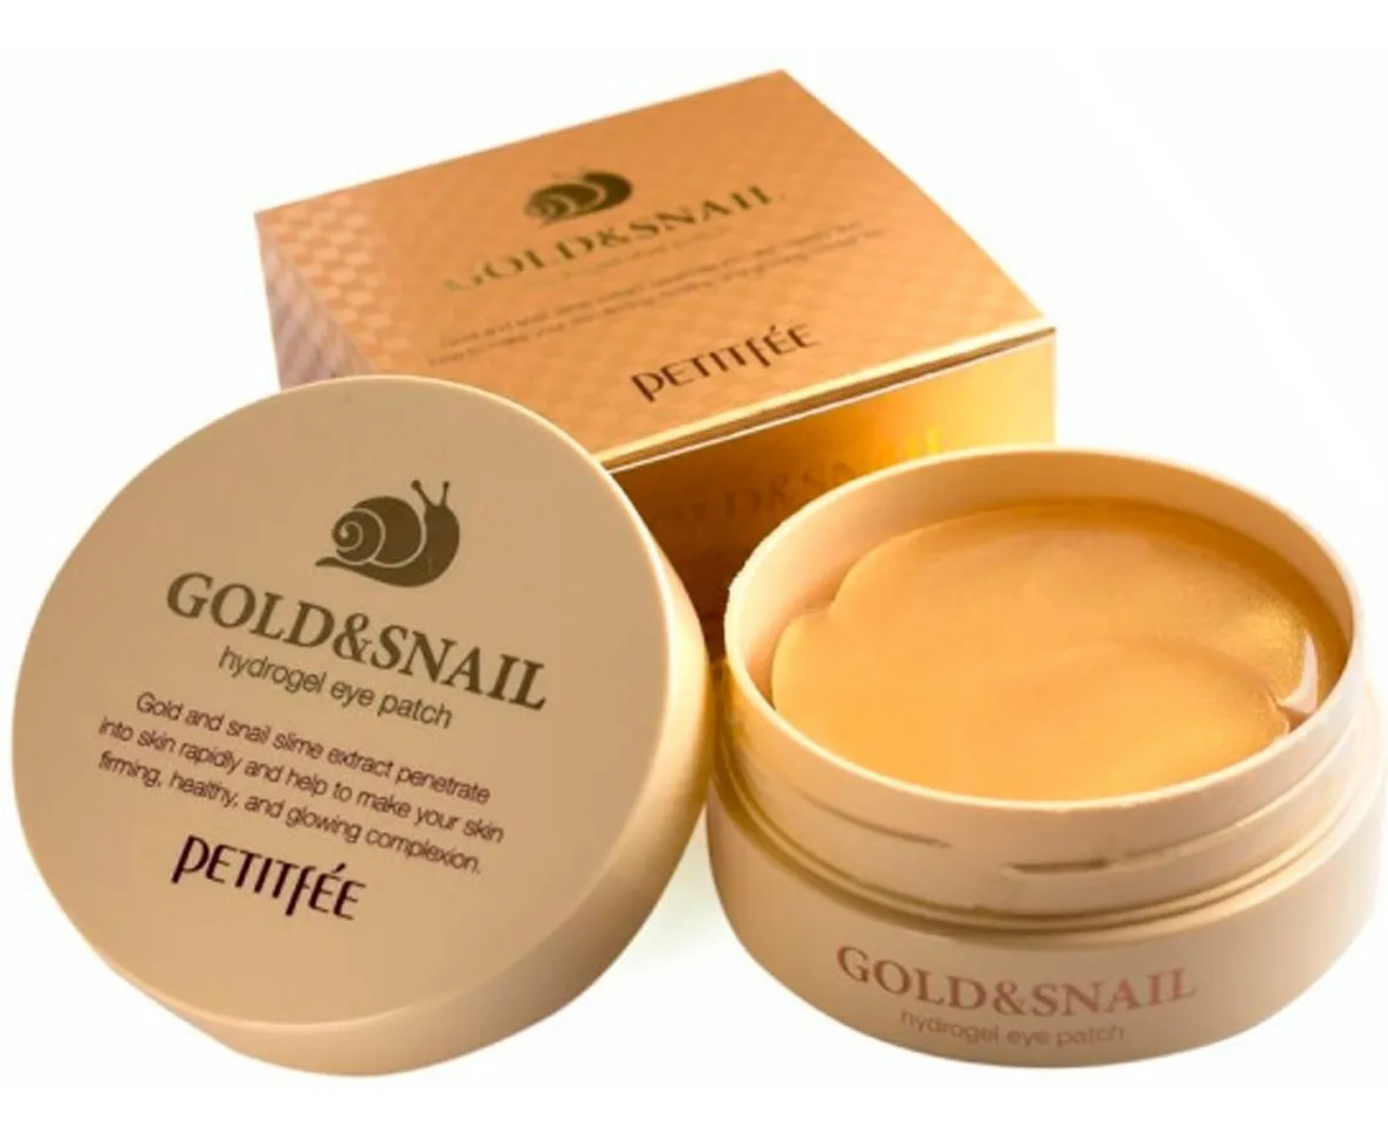 PETITFEE - Gold & Snail Eye Patch - 60 parches